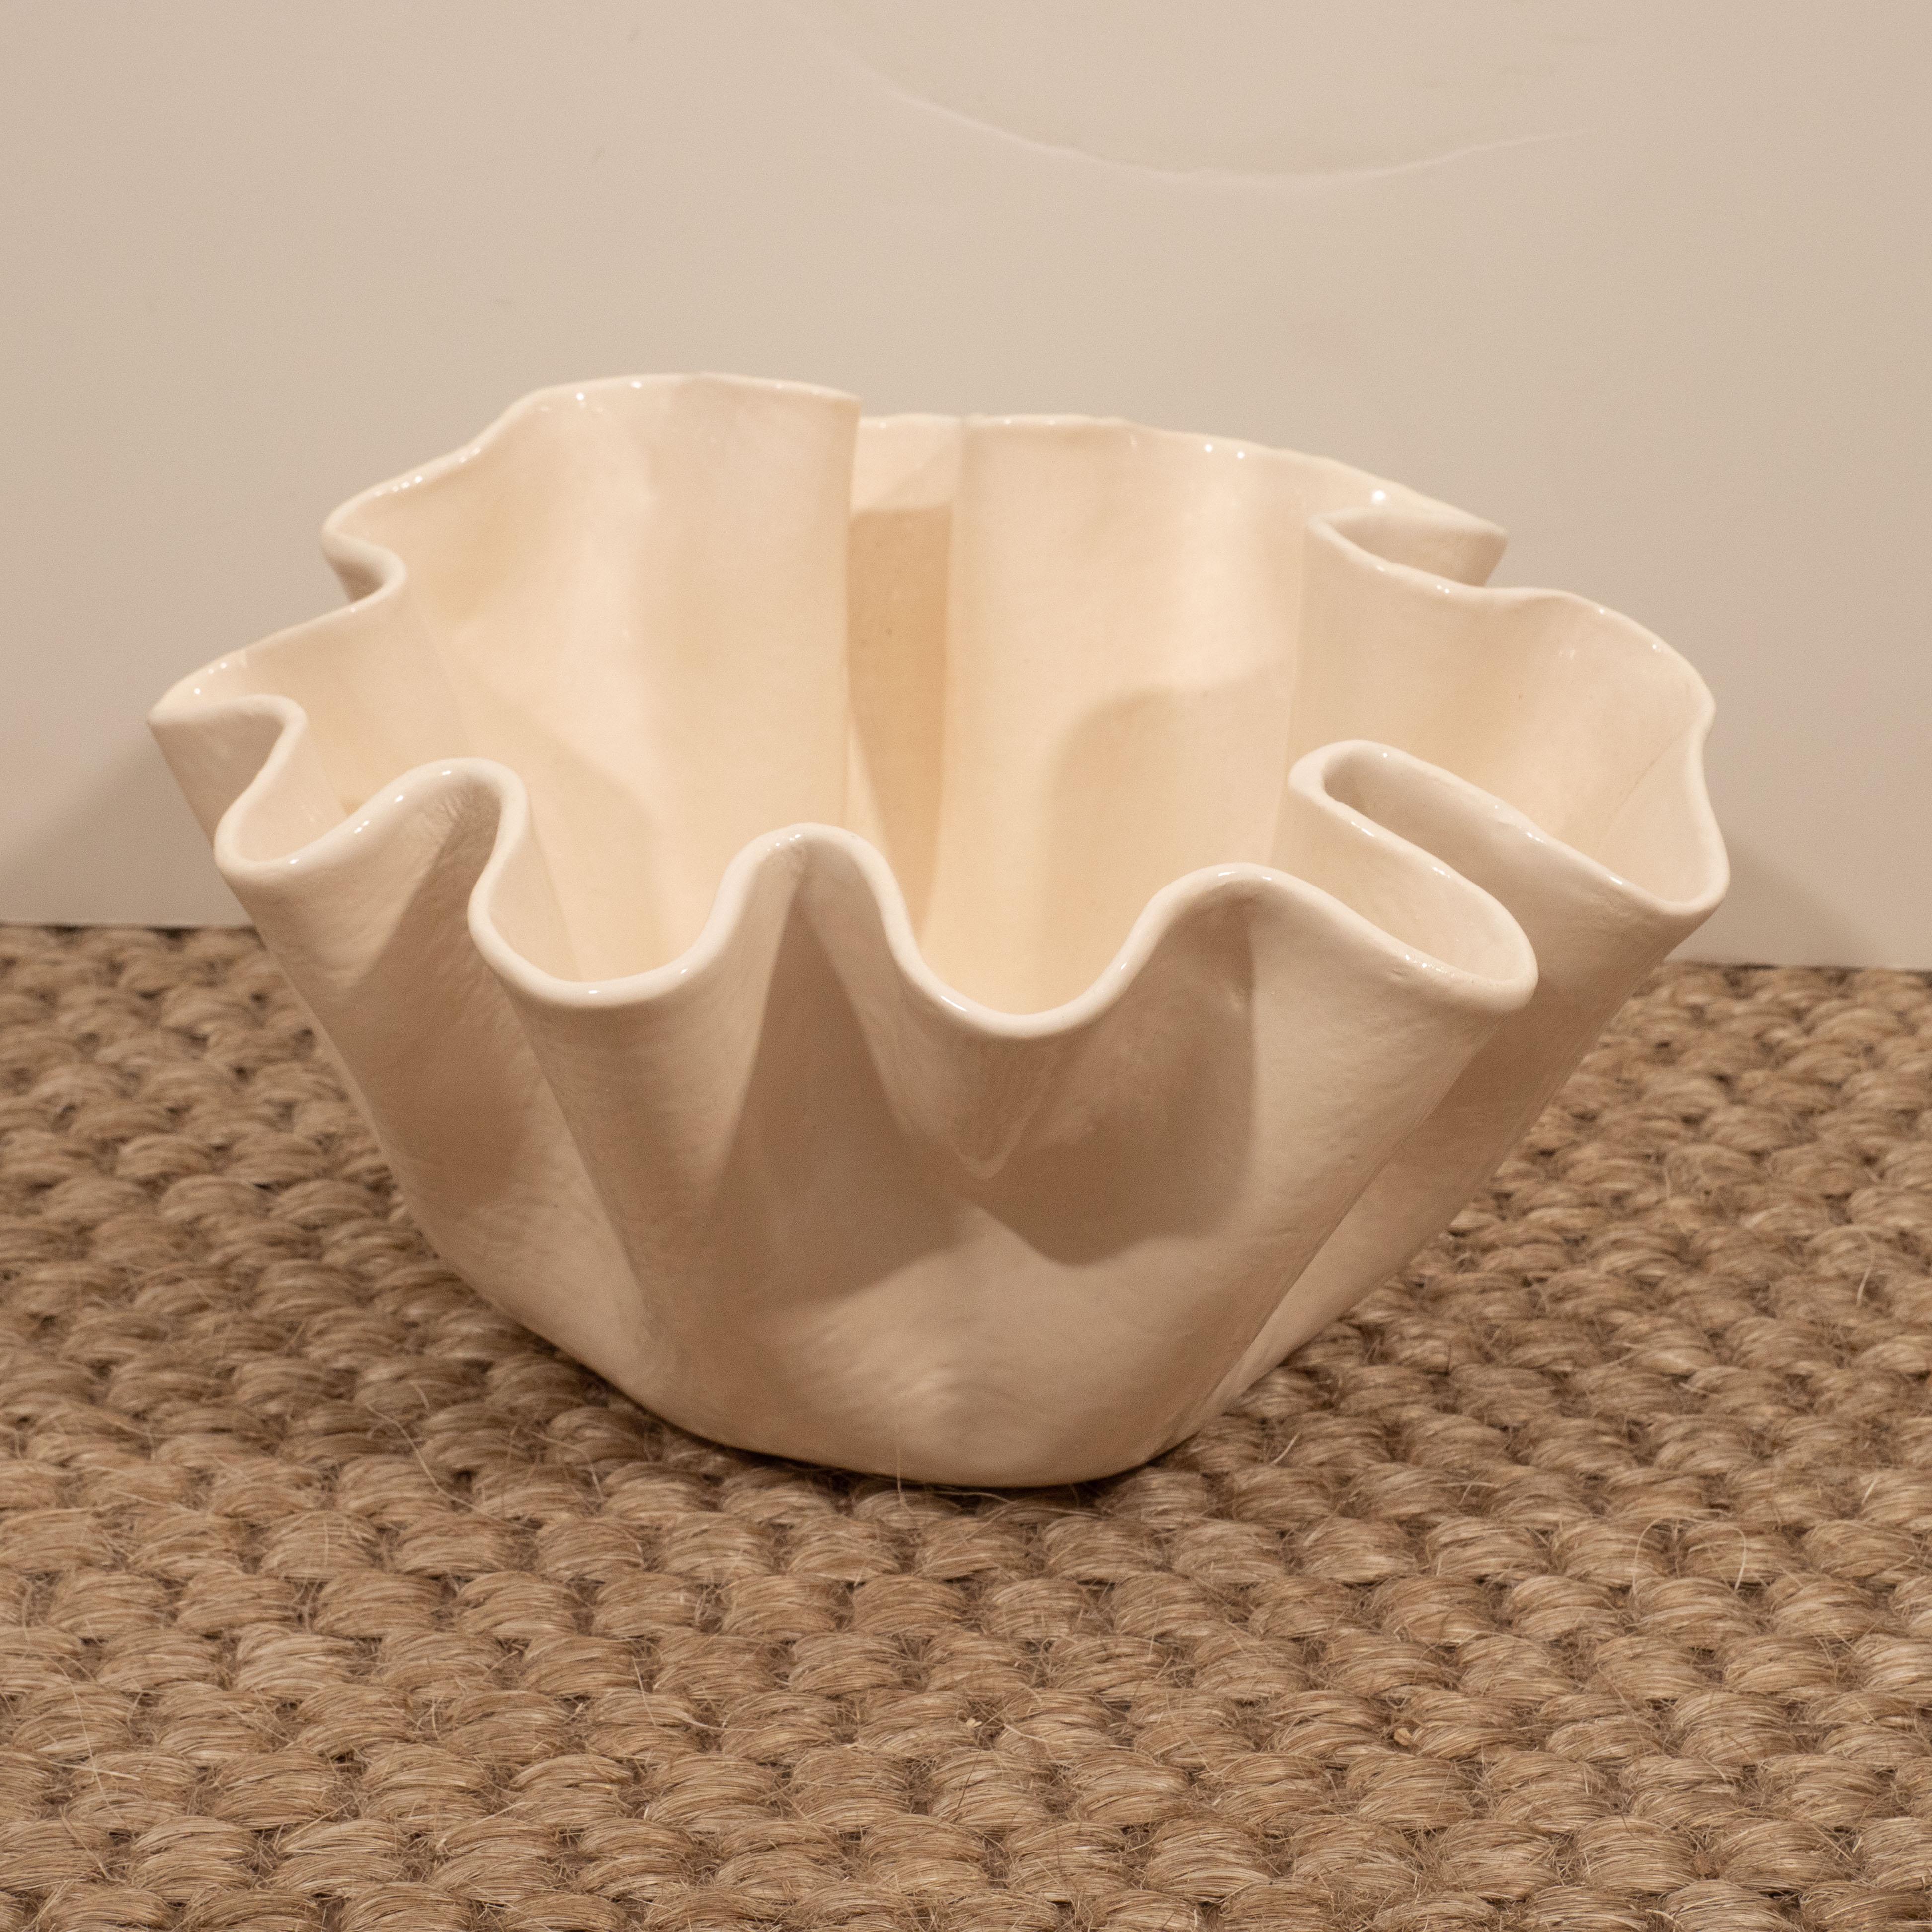 3 White Ceramic Bowls 2